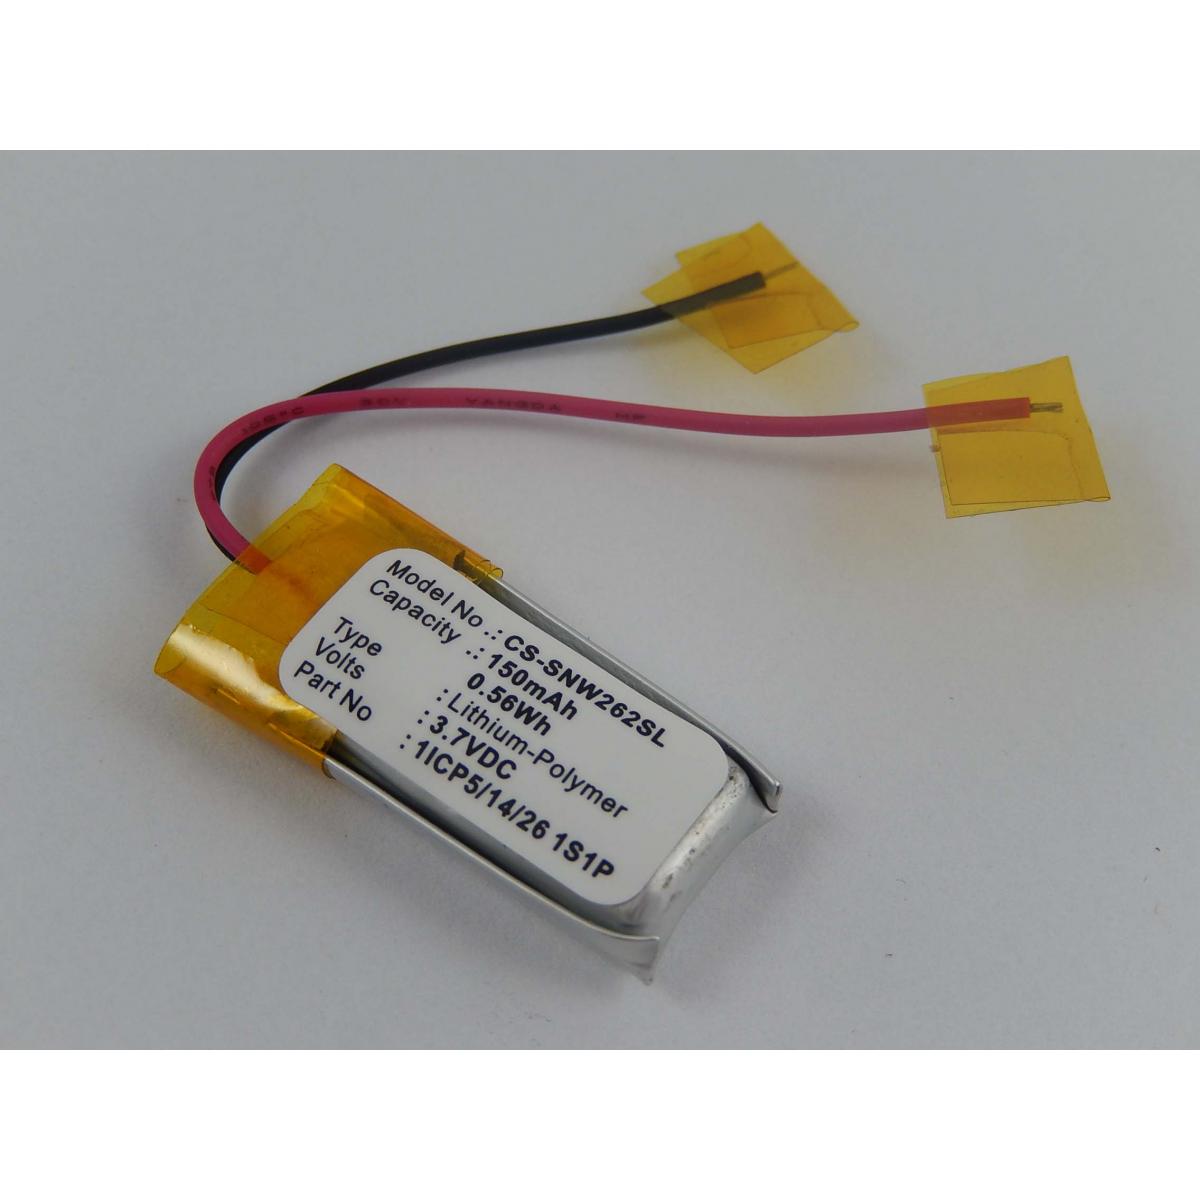 Vhbw - vhbw Li-Polymer batterie 150mAh (3.7V) pour MP3 Player Sony NWZ-W262 comme 1ICP5/14/26 1S1P. - Batteries électroniques